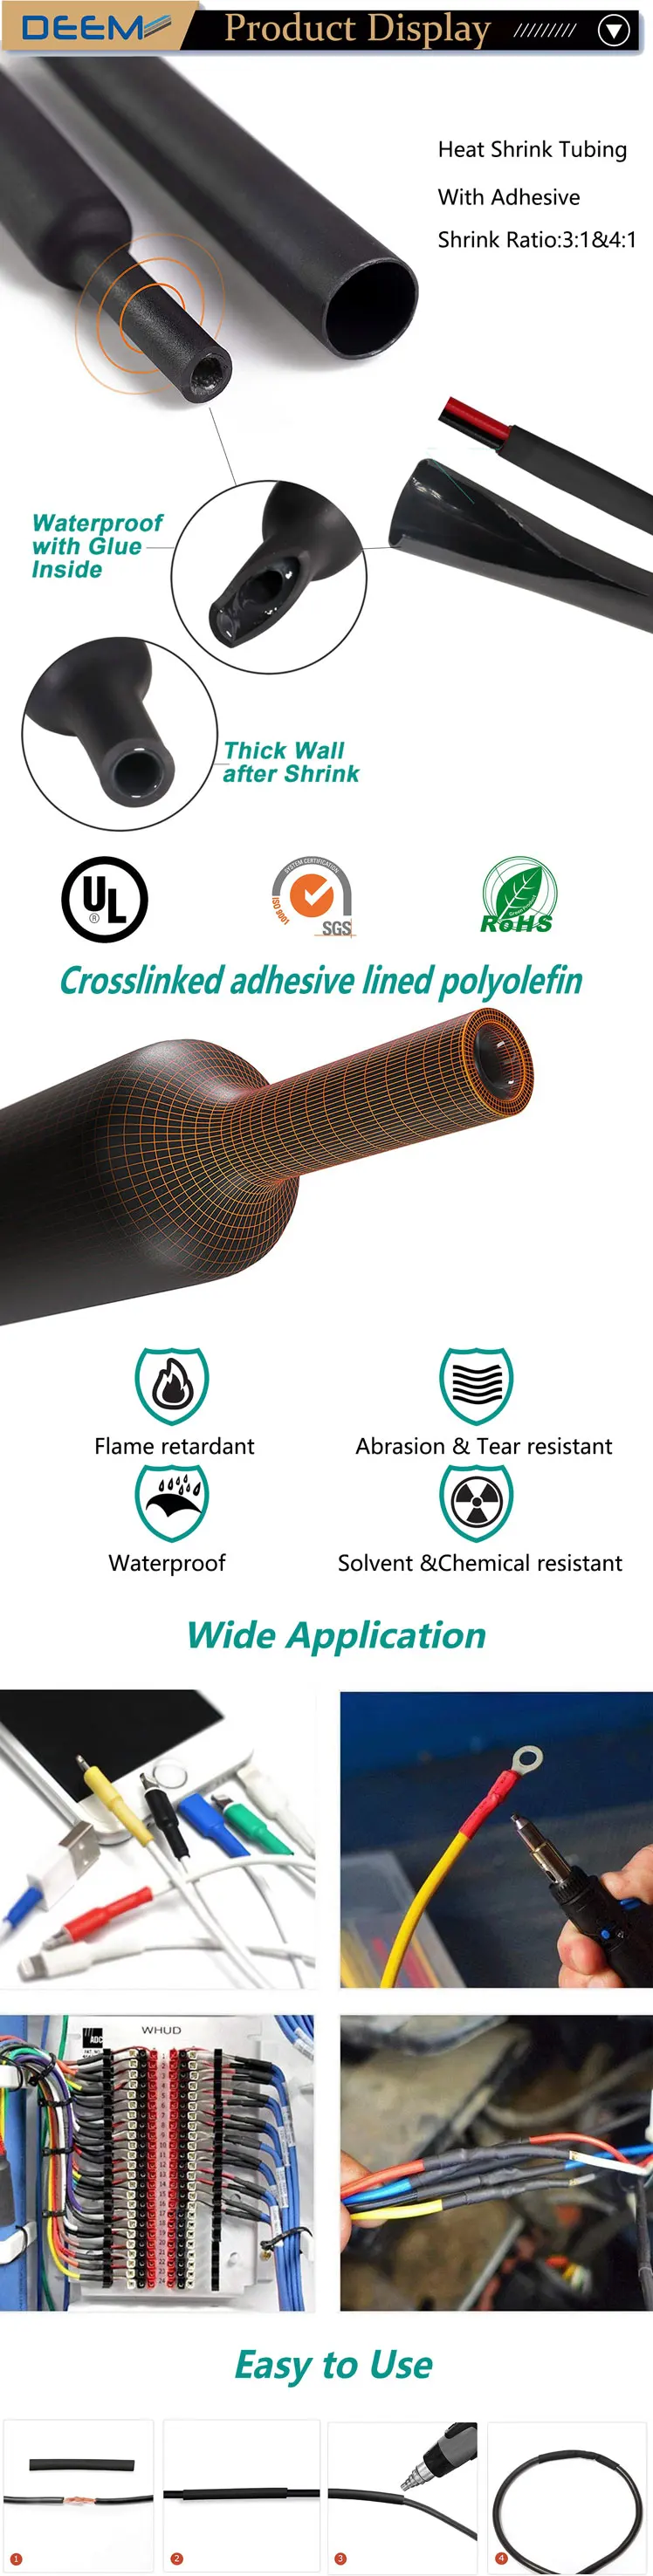 DEEM Dual-walled design Hot Melt Adhesive heat shrinkable tube